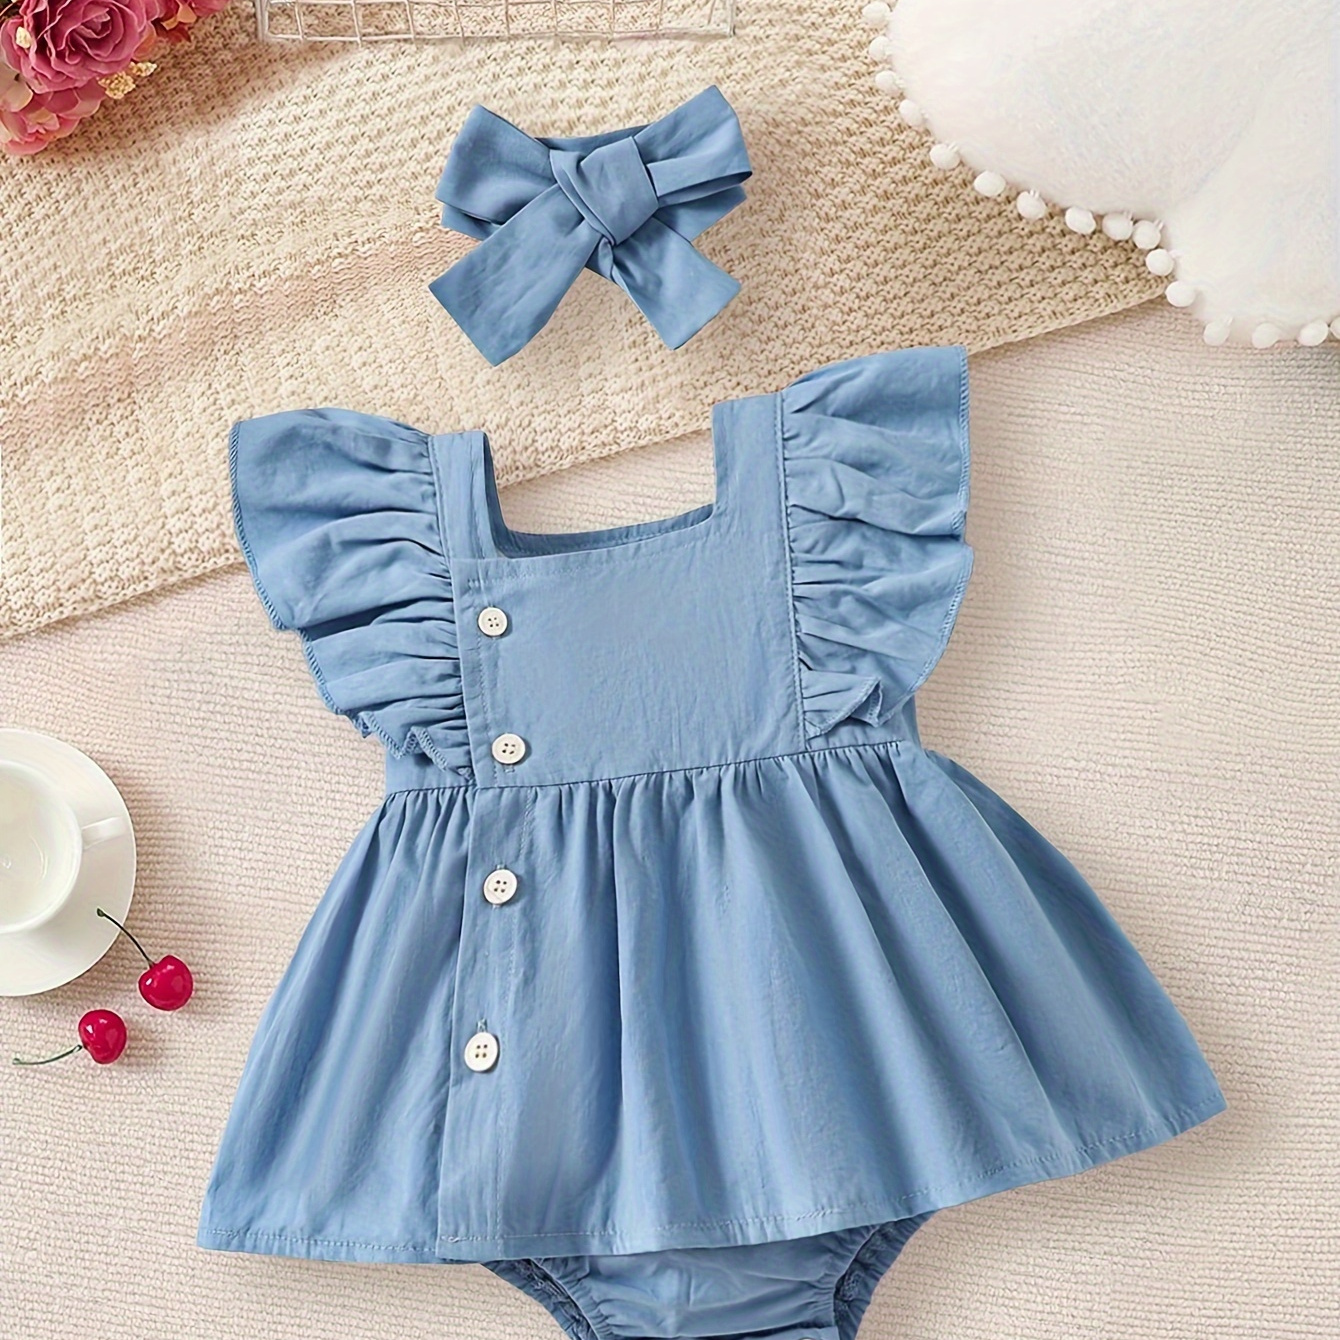 

Baby's Lovely Button Decor Square Neck Cap Sleeve Romper Dress, Infant & Toddler Girl's Clothing For Summer/spring, As Gift